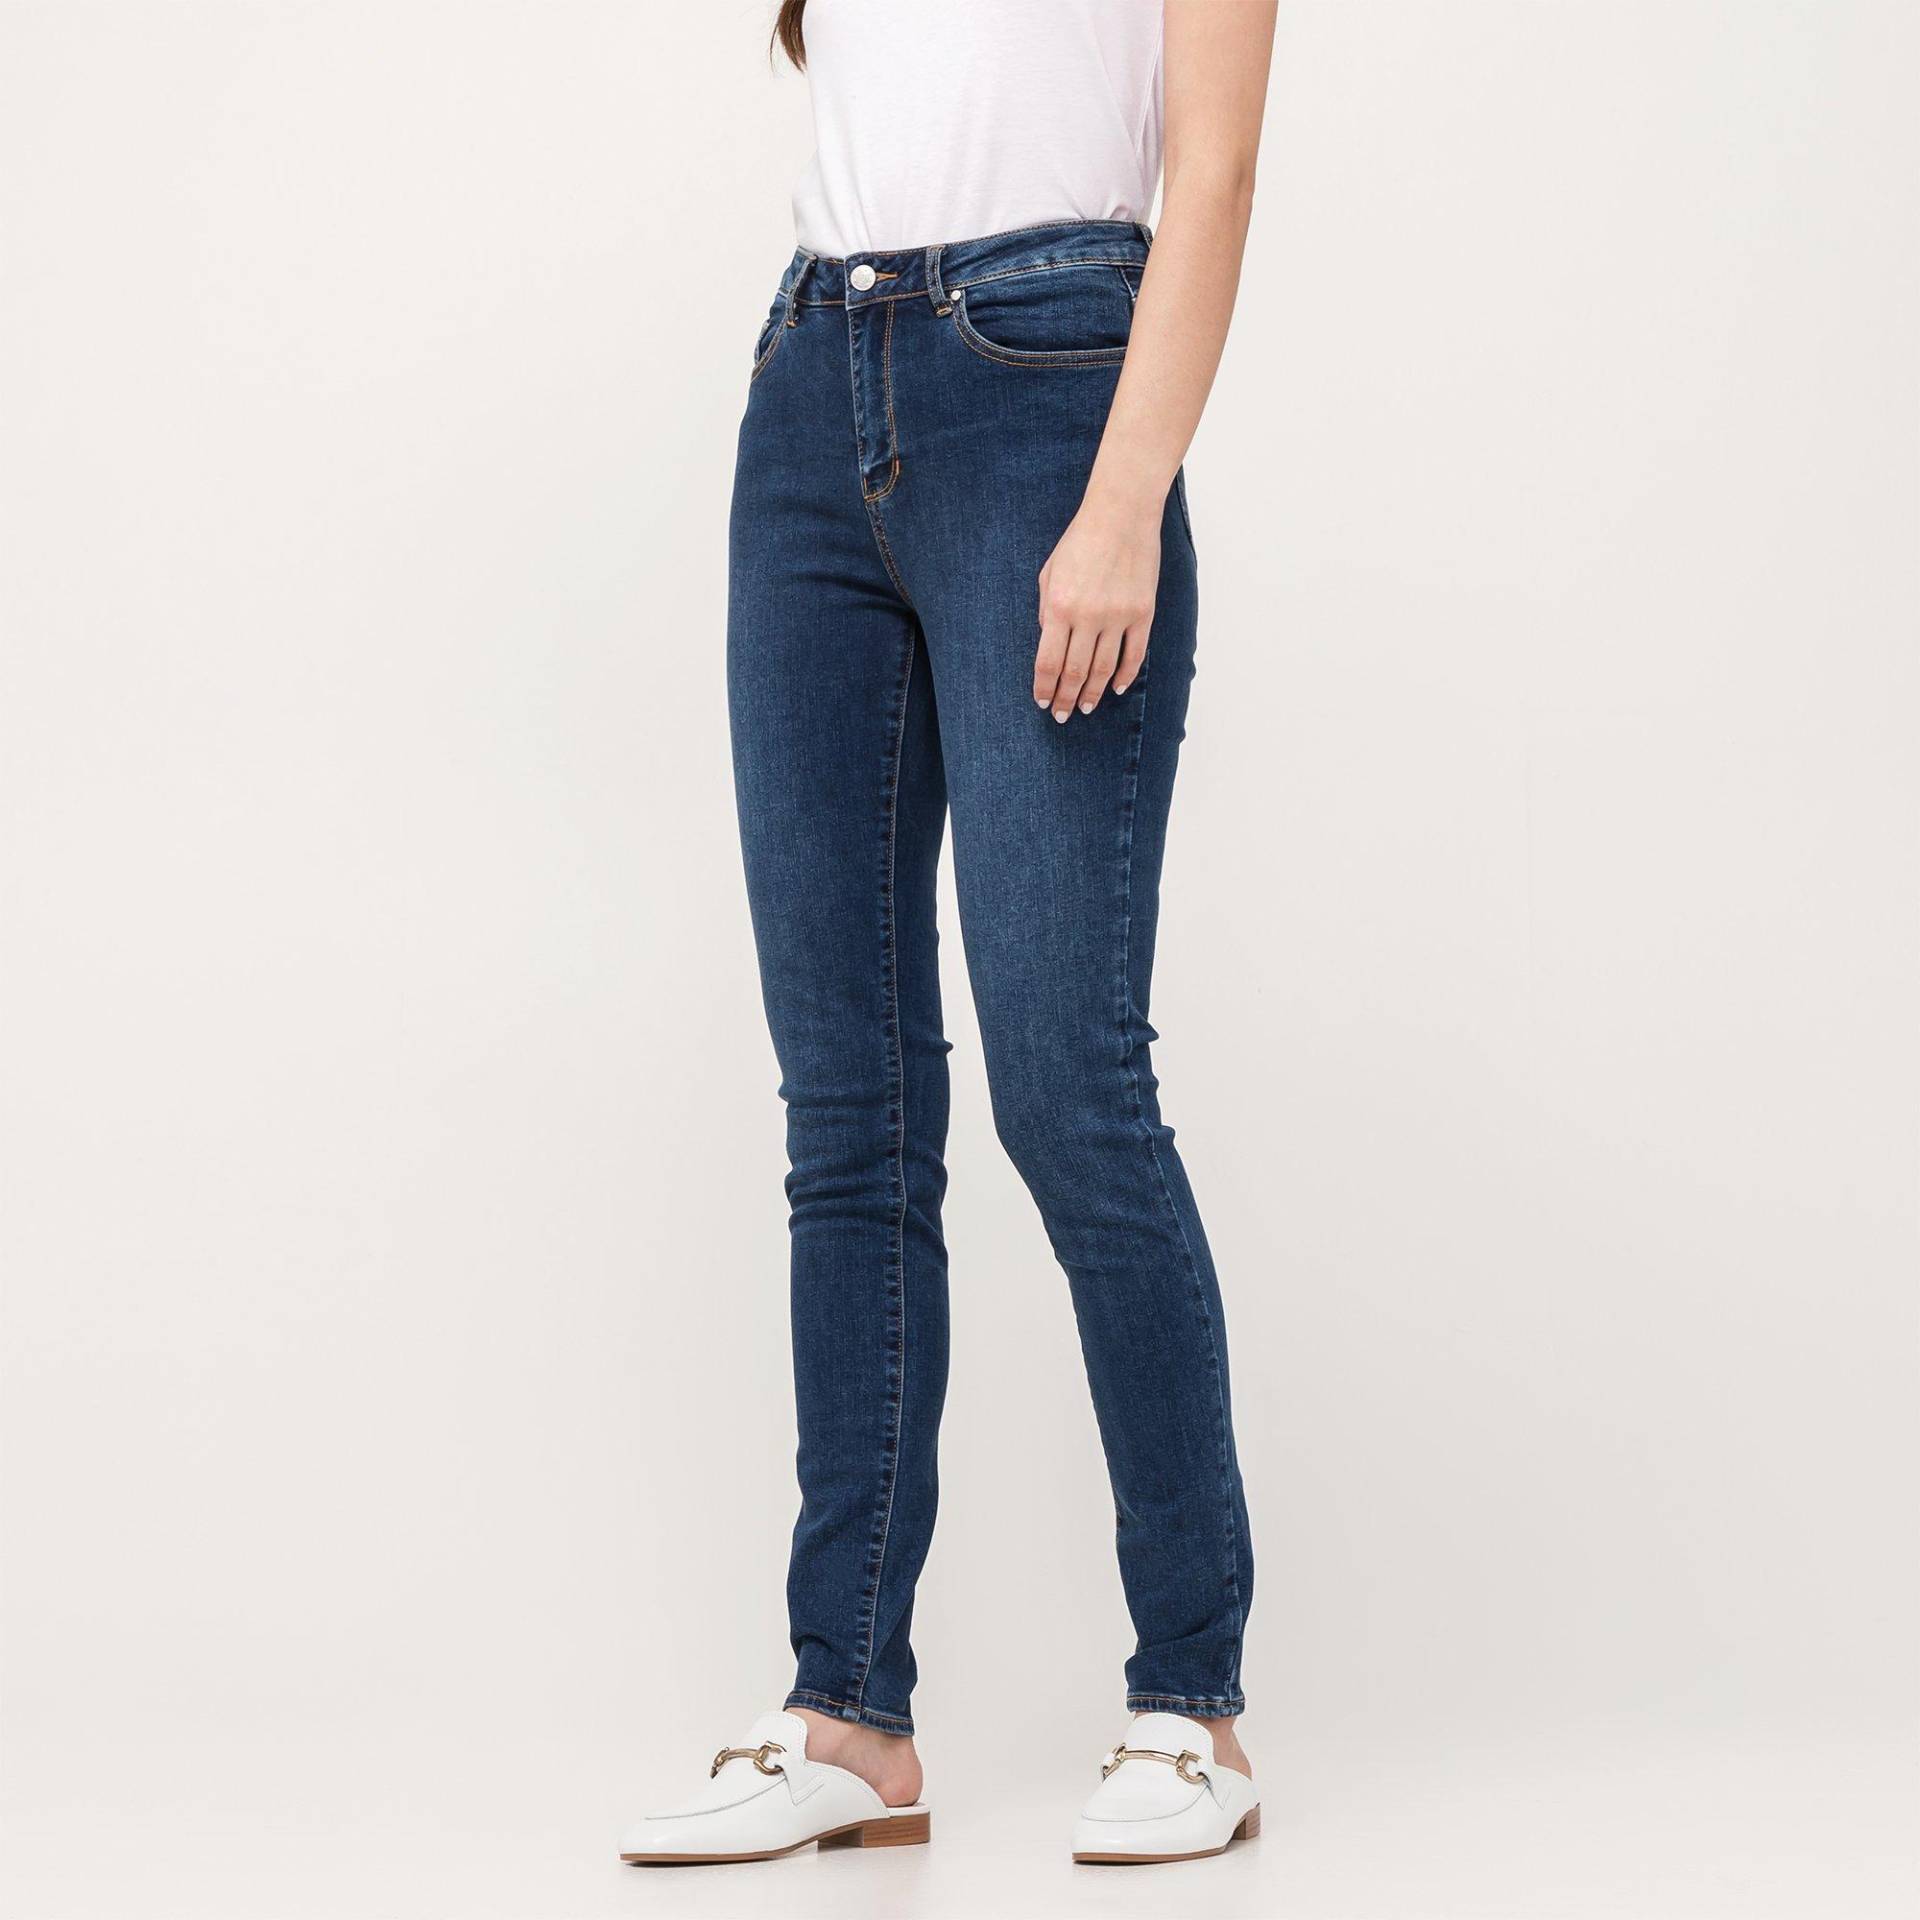 Jeans, Slim Fit Damen Blau Denim L30/W40 von Manor Woman